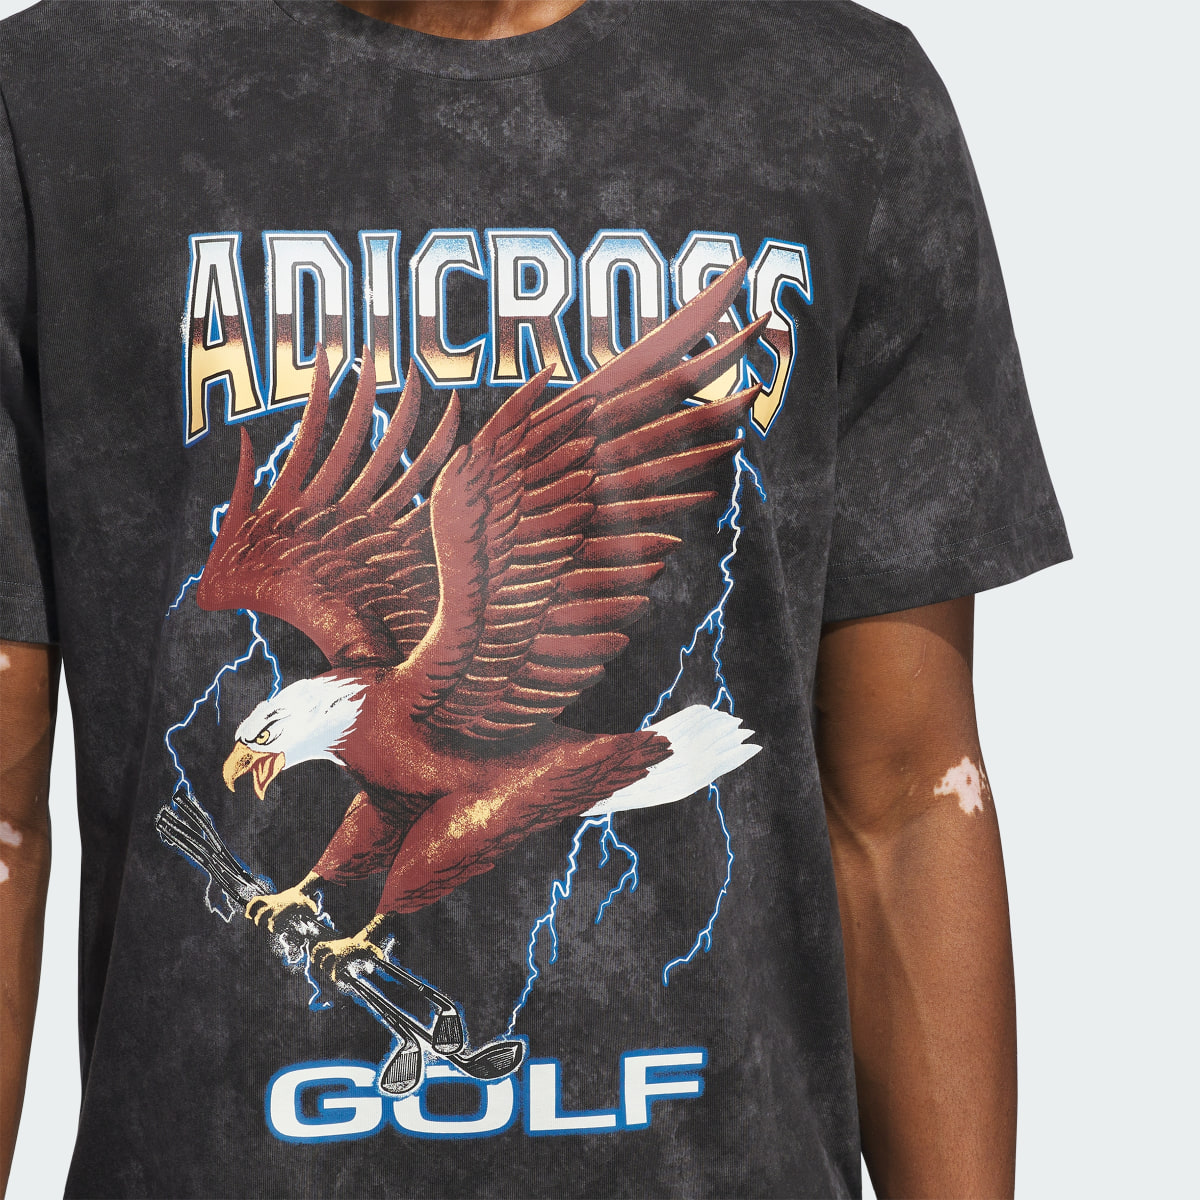 Adidas T-shirt adicross Eagle Graphic. 6